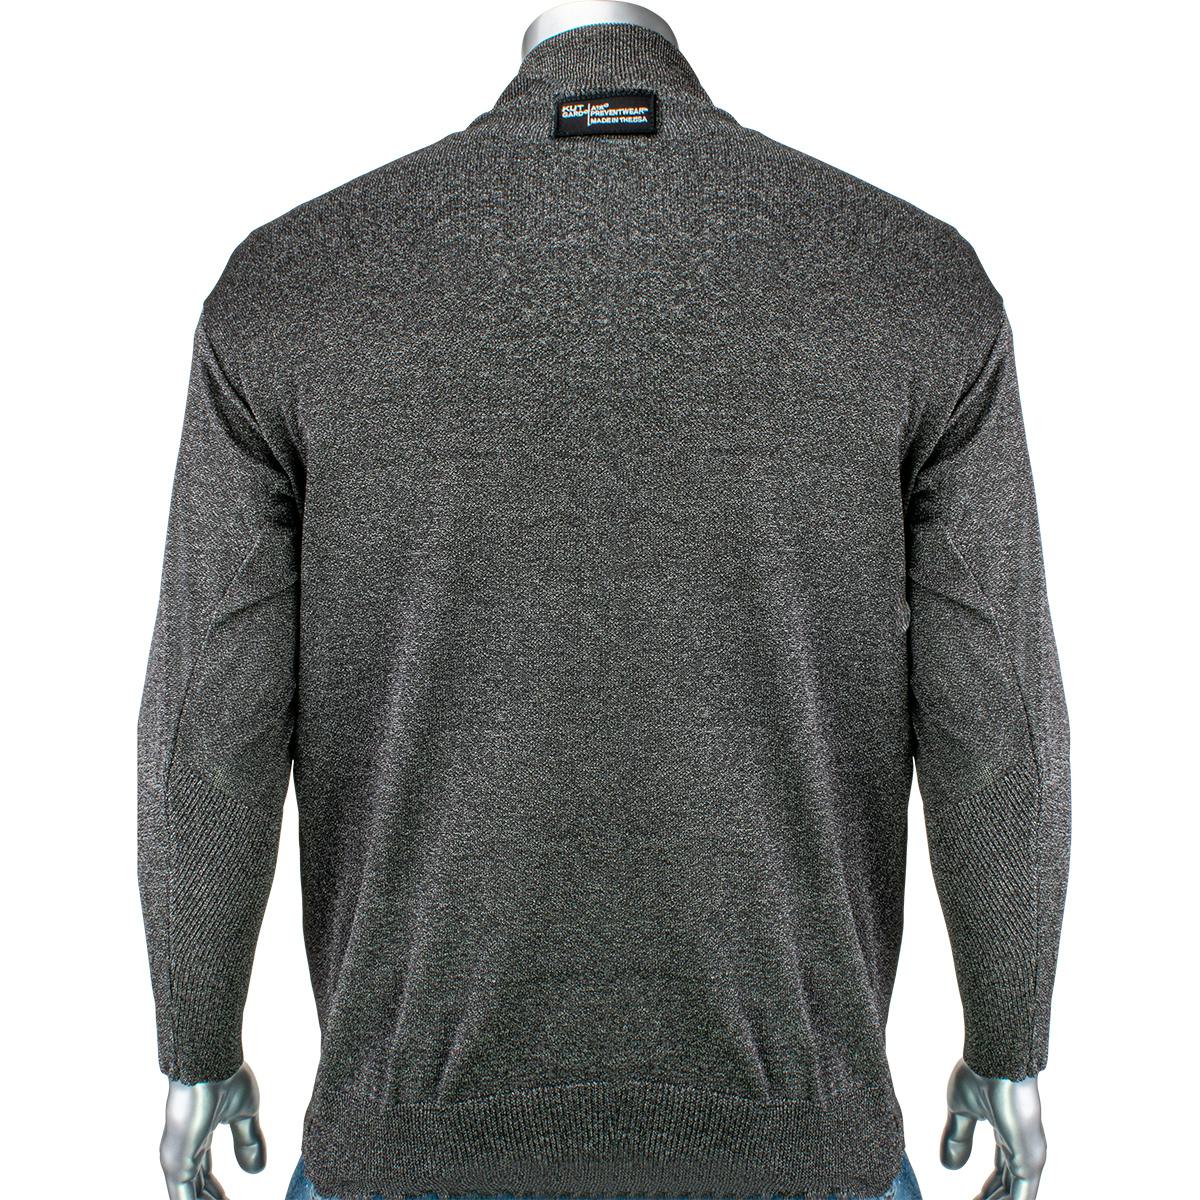 ATA® Blended Cut Resistant Pullover, Dark Gray (P100SP)